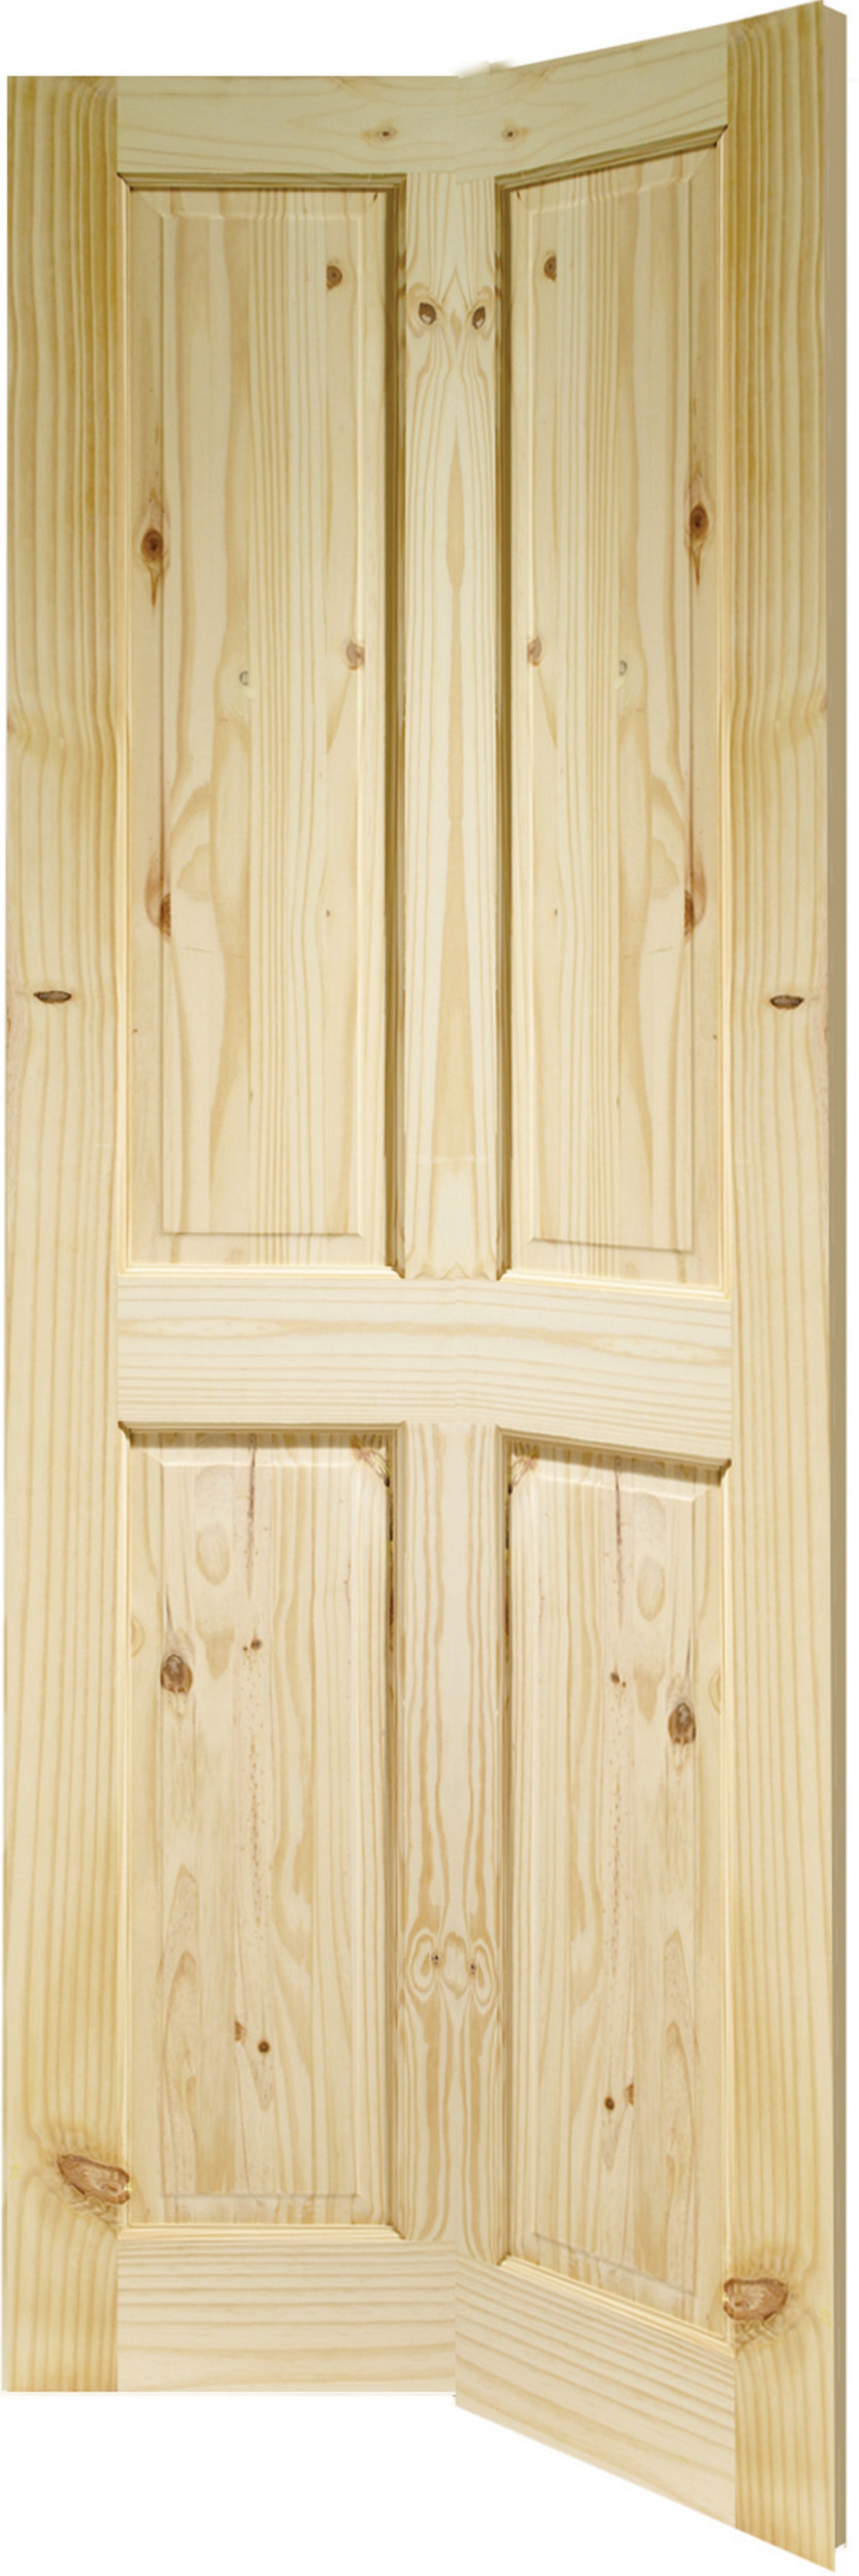 Image of Wickes Chester Knotty Pine 4 Panel Internal Bi-Fold Door - 1981 x 762mm